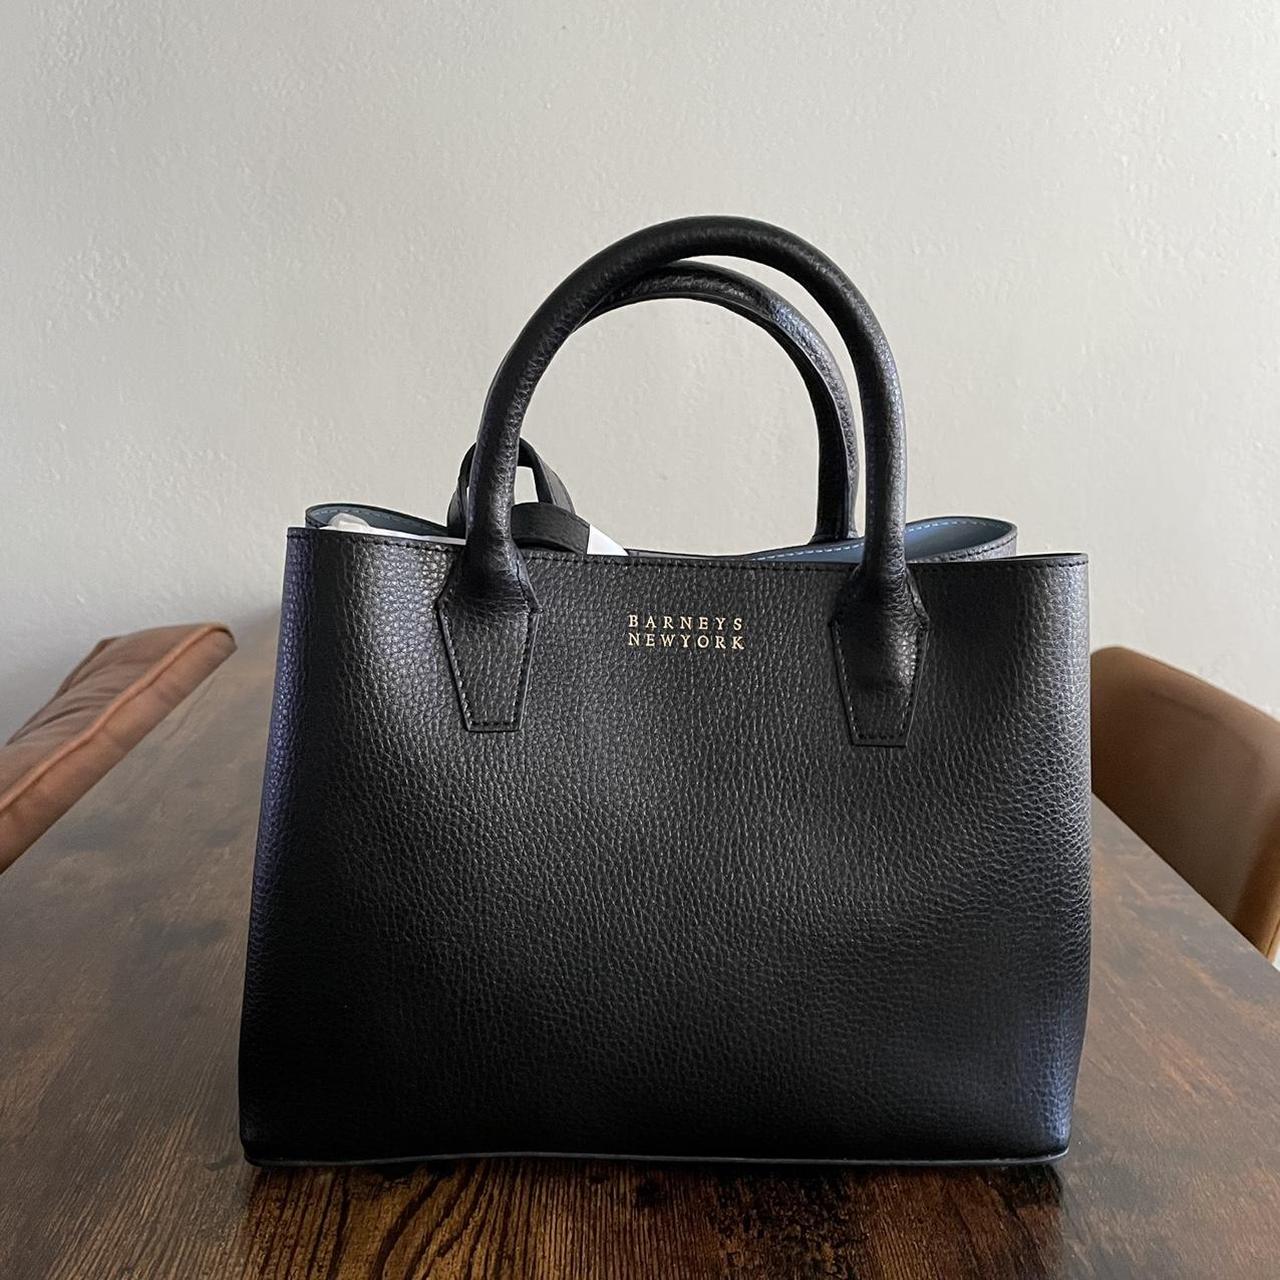 Product Image 1 - Barney’s New York
Jane leather satchel